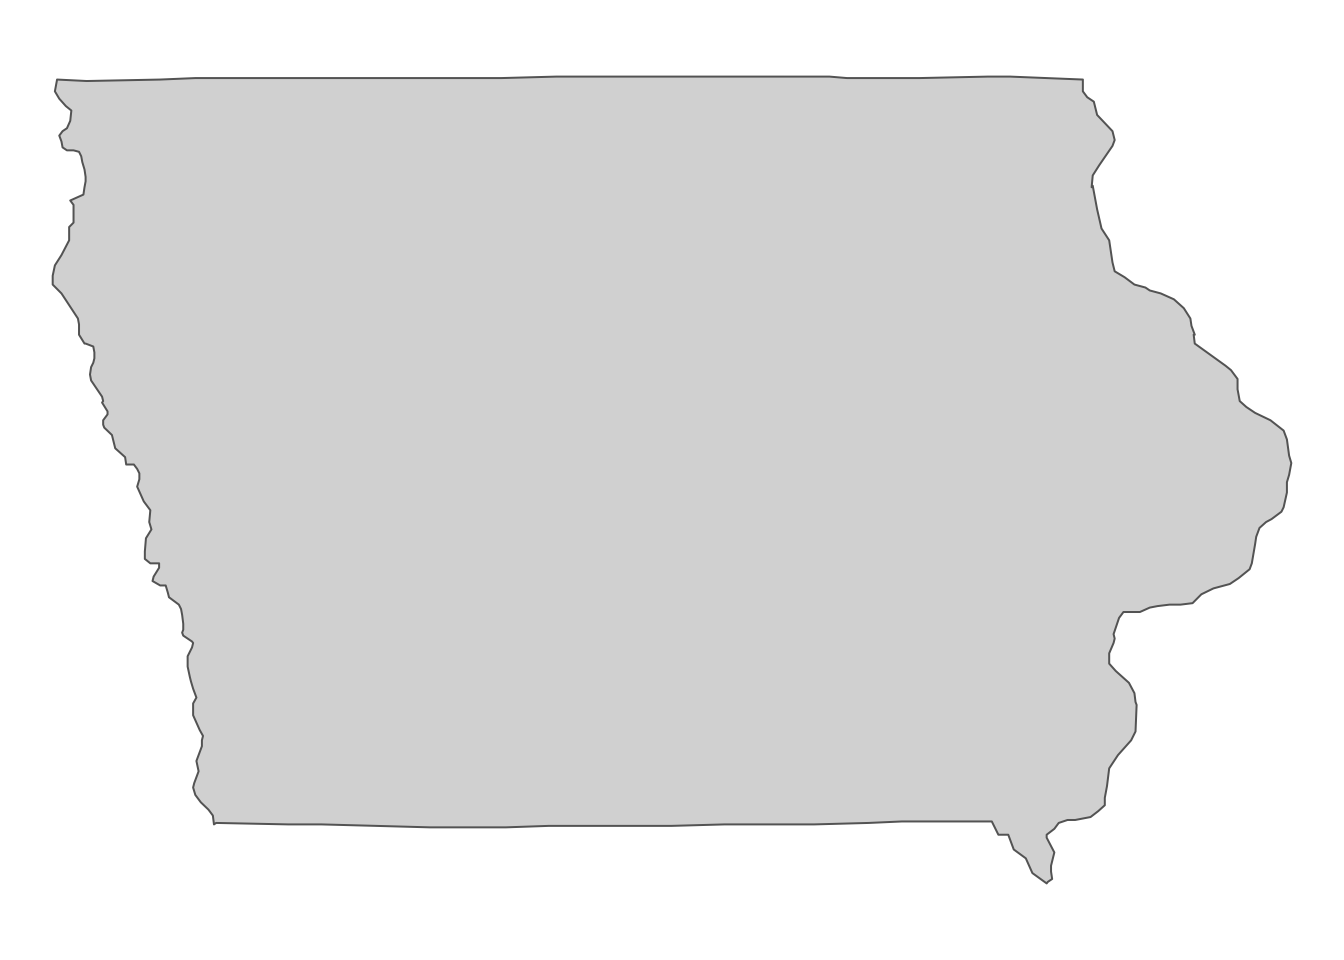 Iowa state boundary